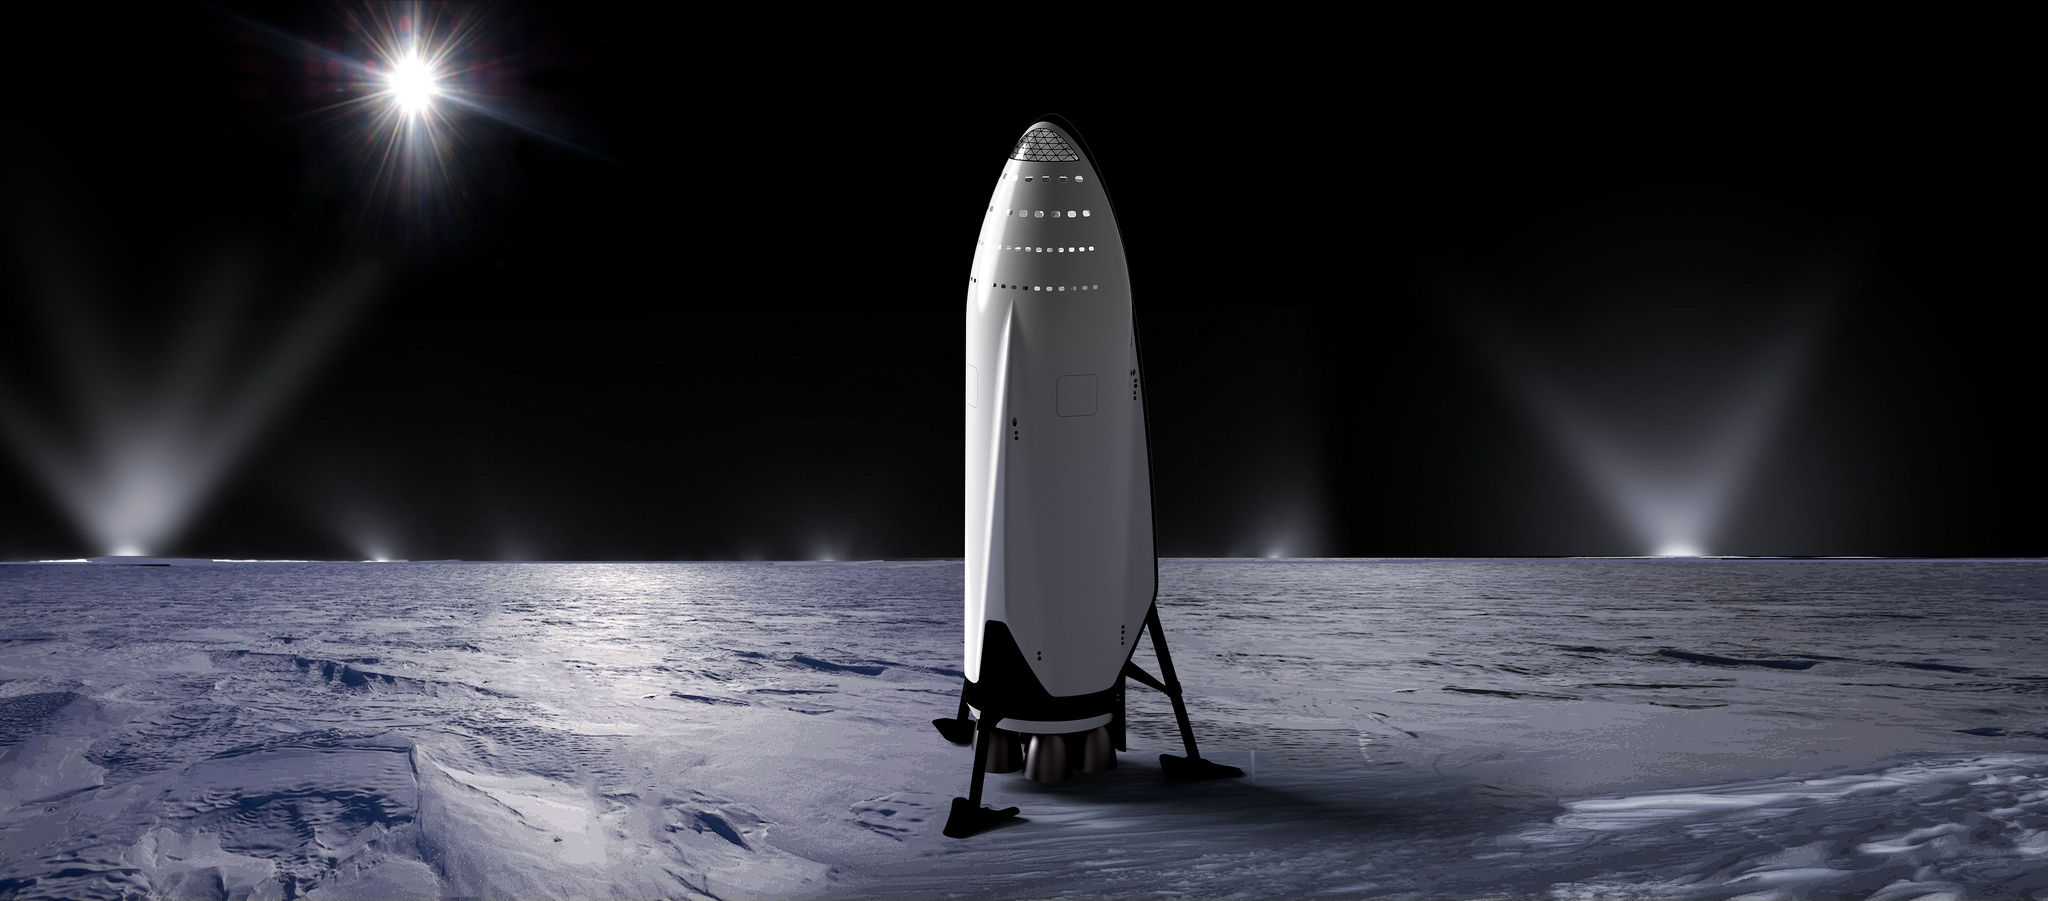 SpaceX skal fly to privatpersoner rundt månen i 2018. Illustrasjonsfoto.